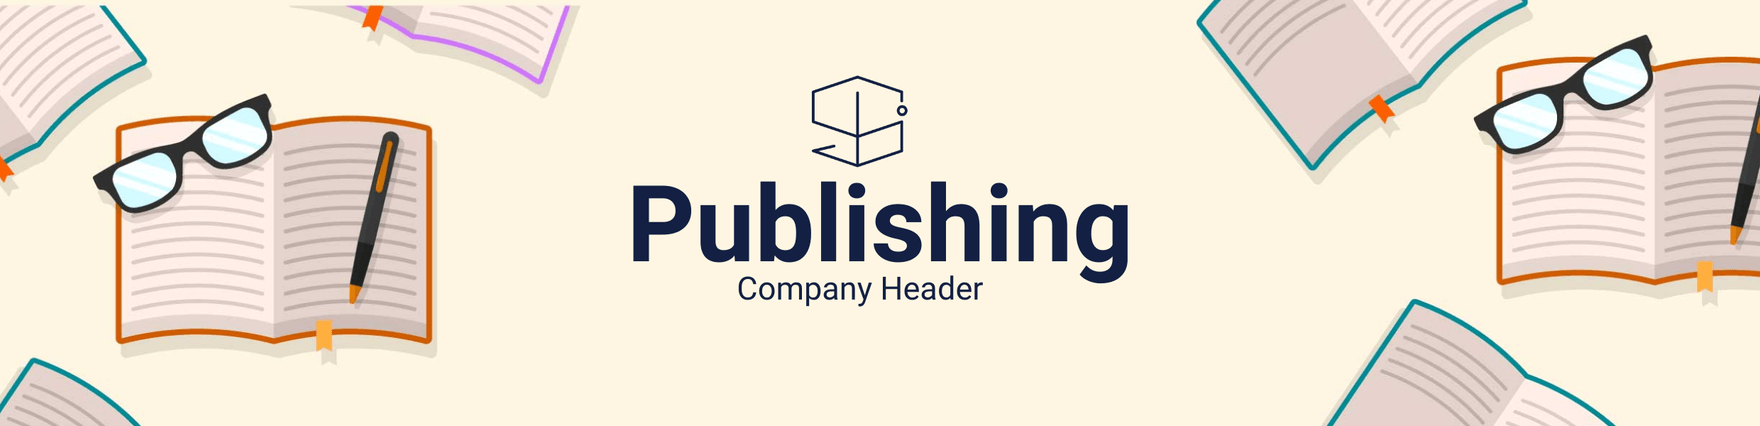 Publishing Company Header Template